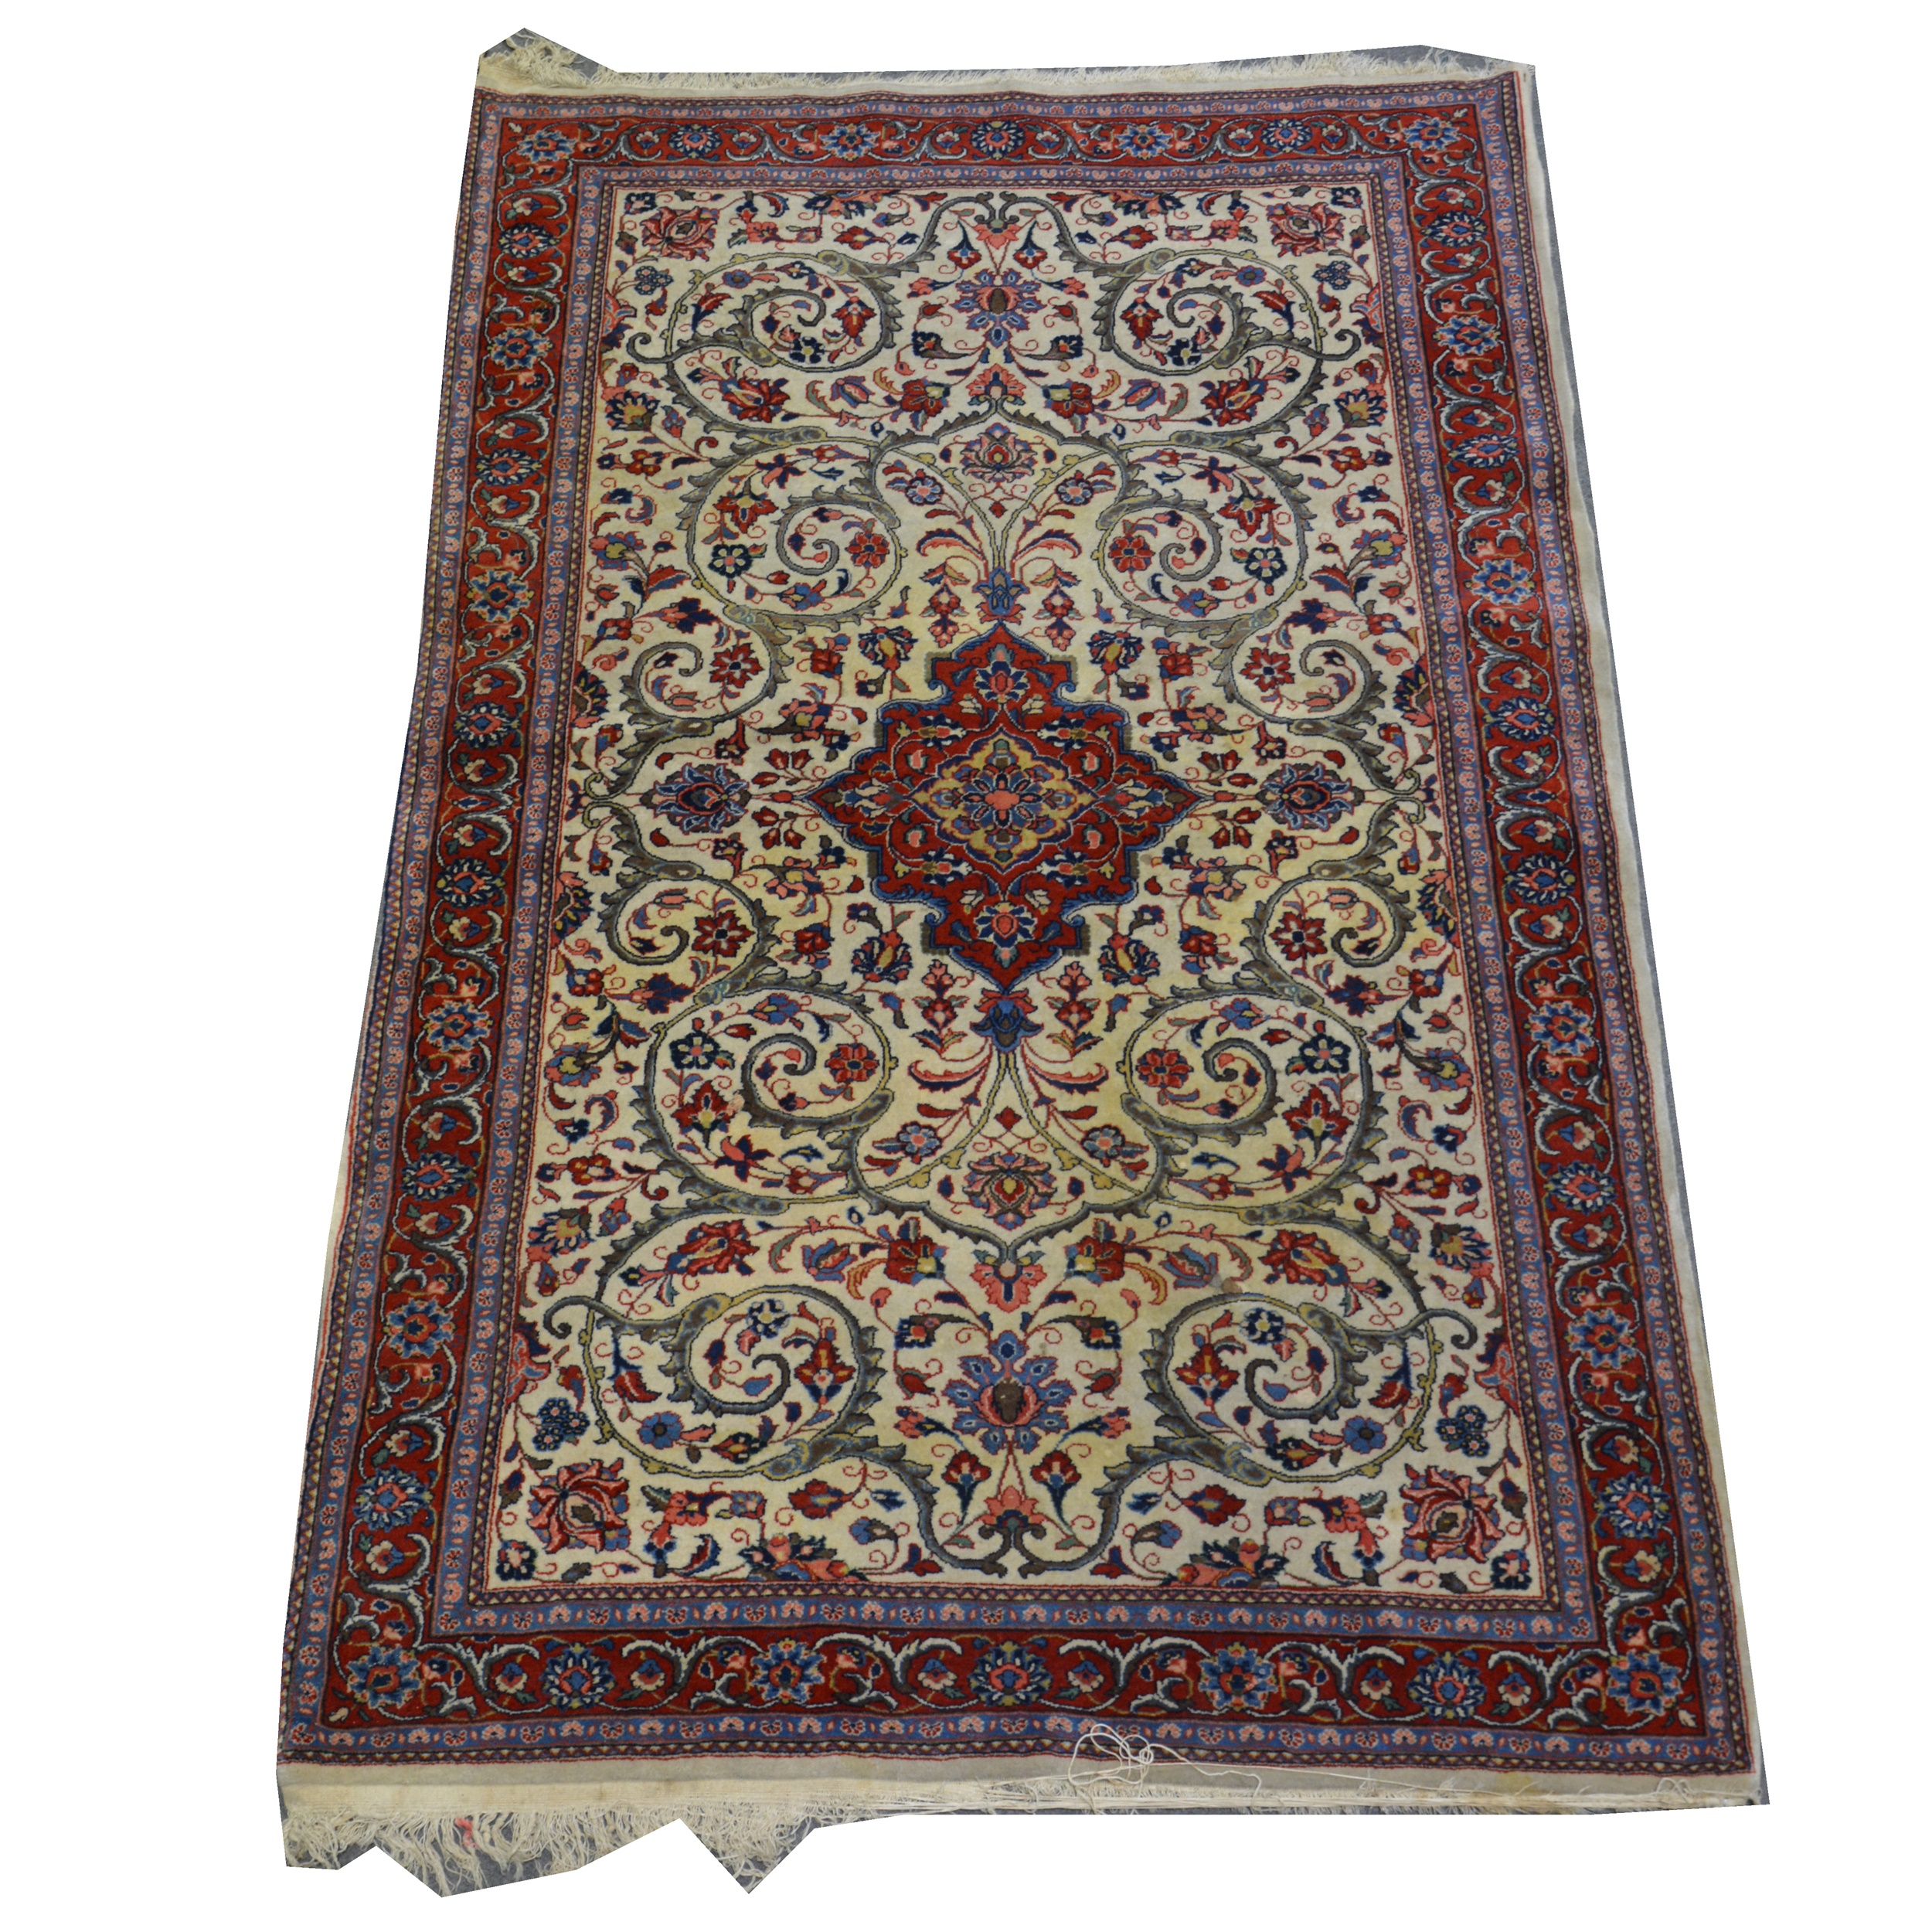 A Kashan pattern rug